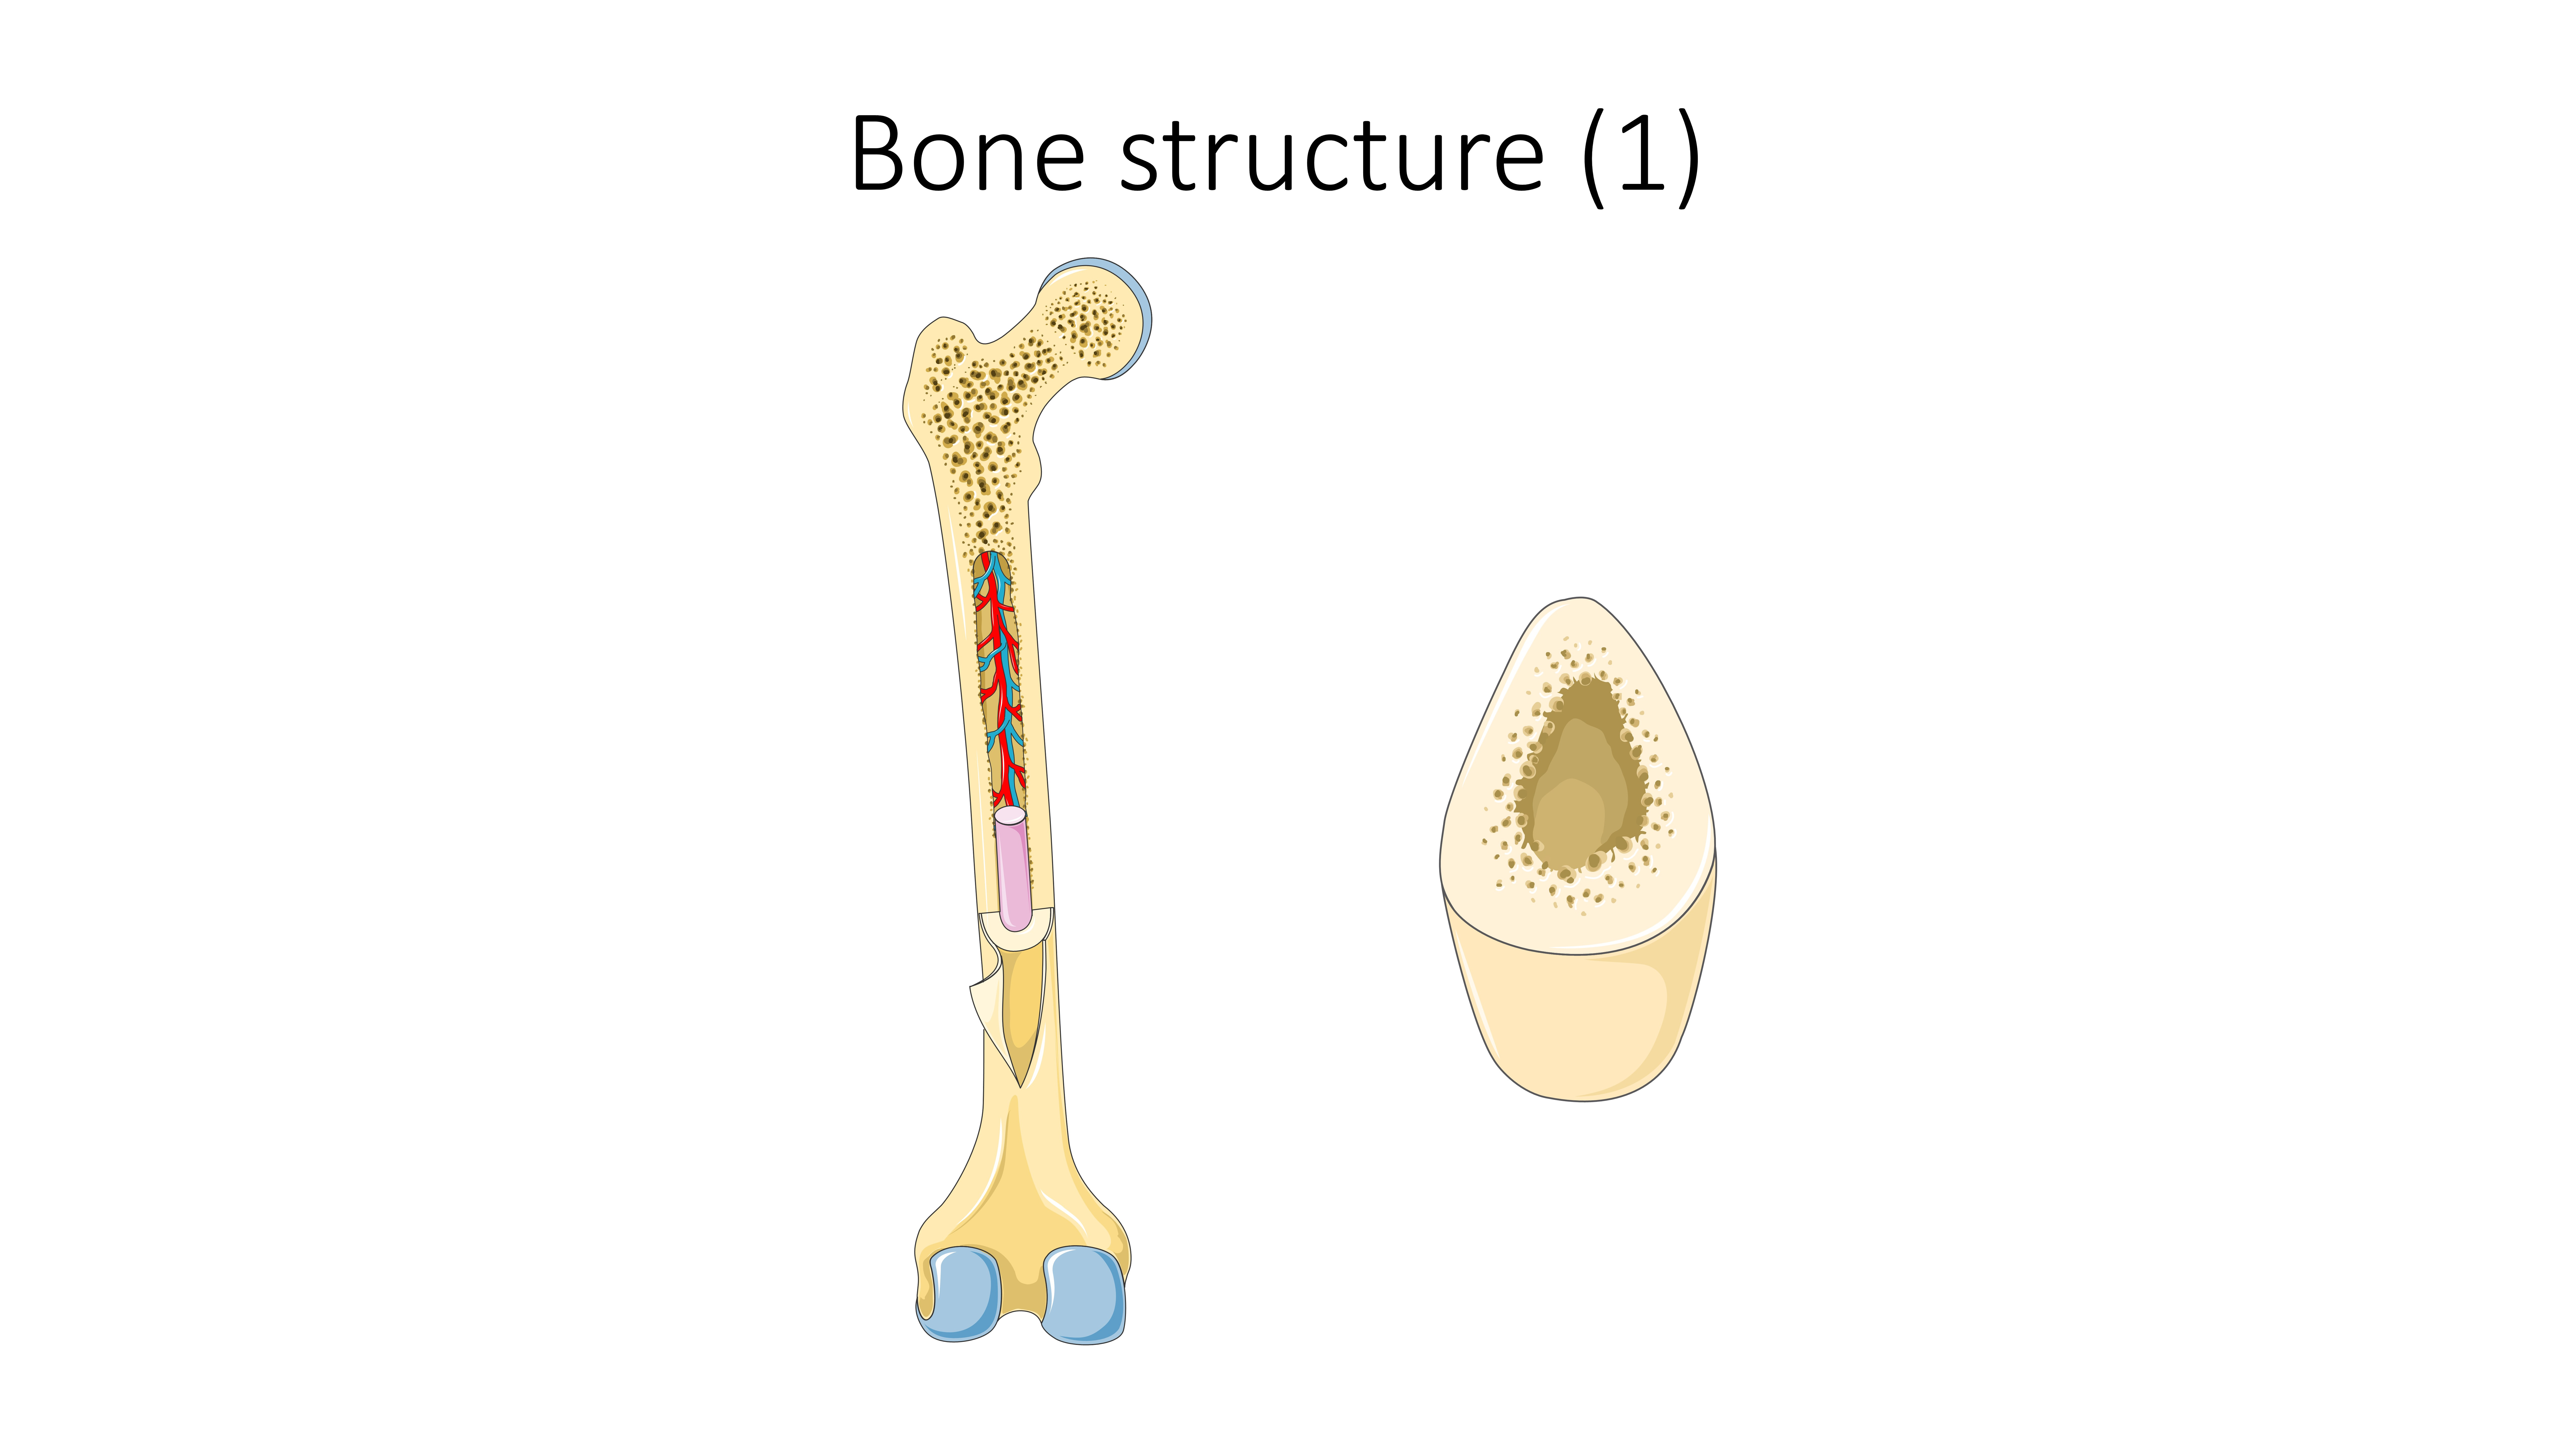 Now bone. Bone structure.